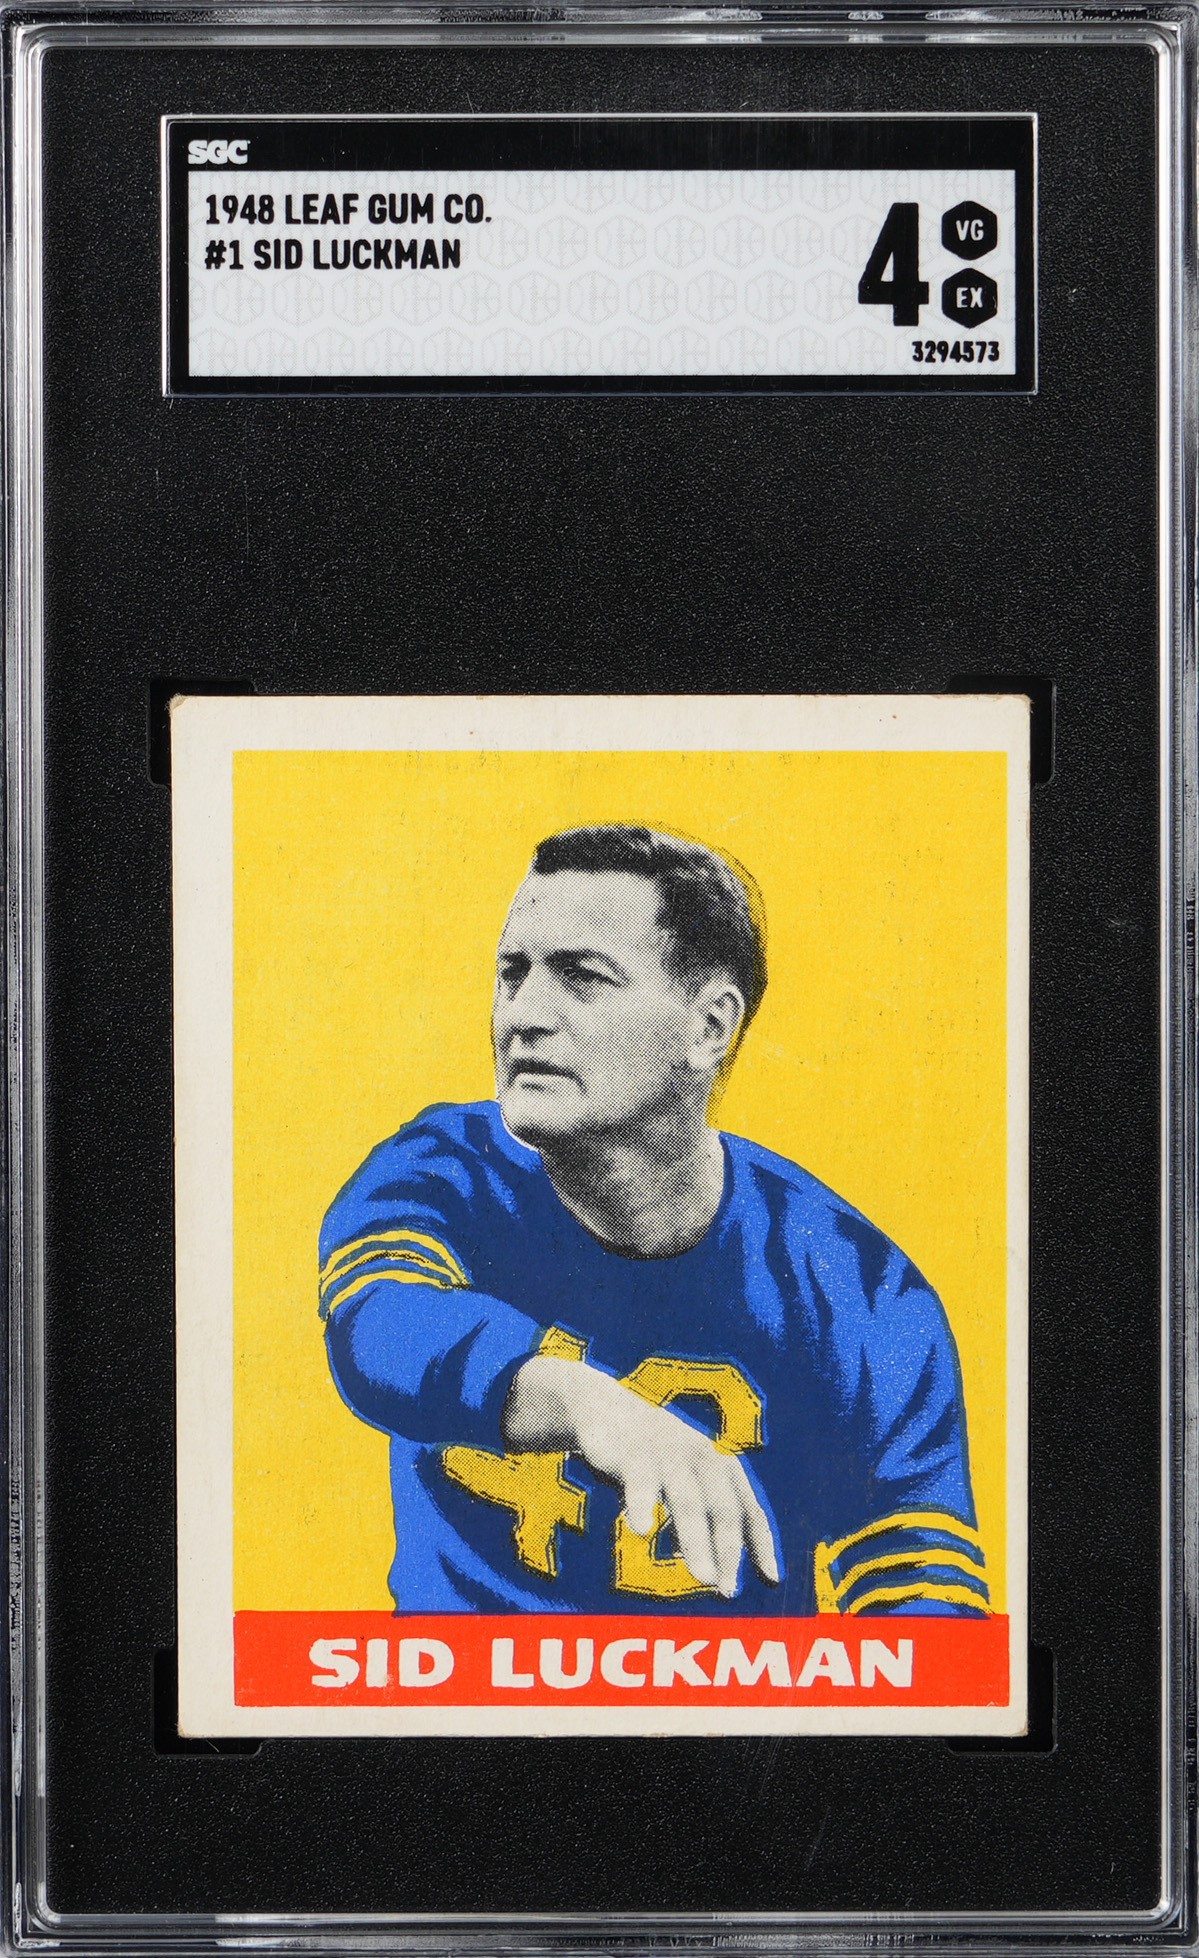 1948 Leaf Football #1 Sid Luckman Rookie (Yellow Background) SGC VG/EX 4